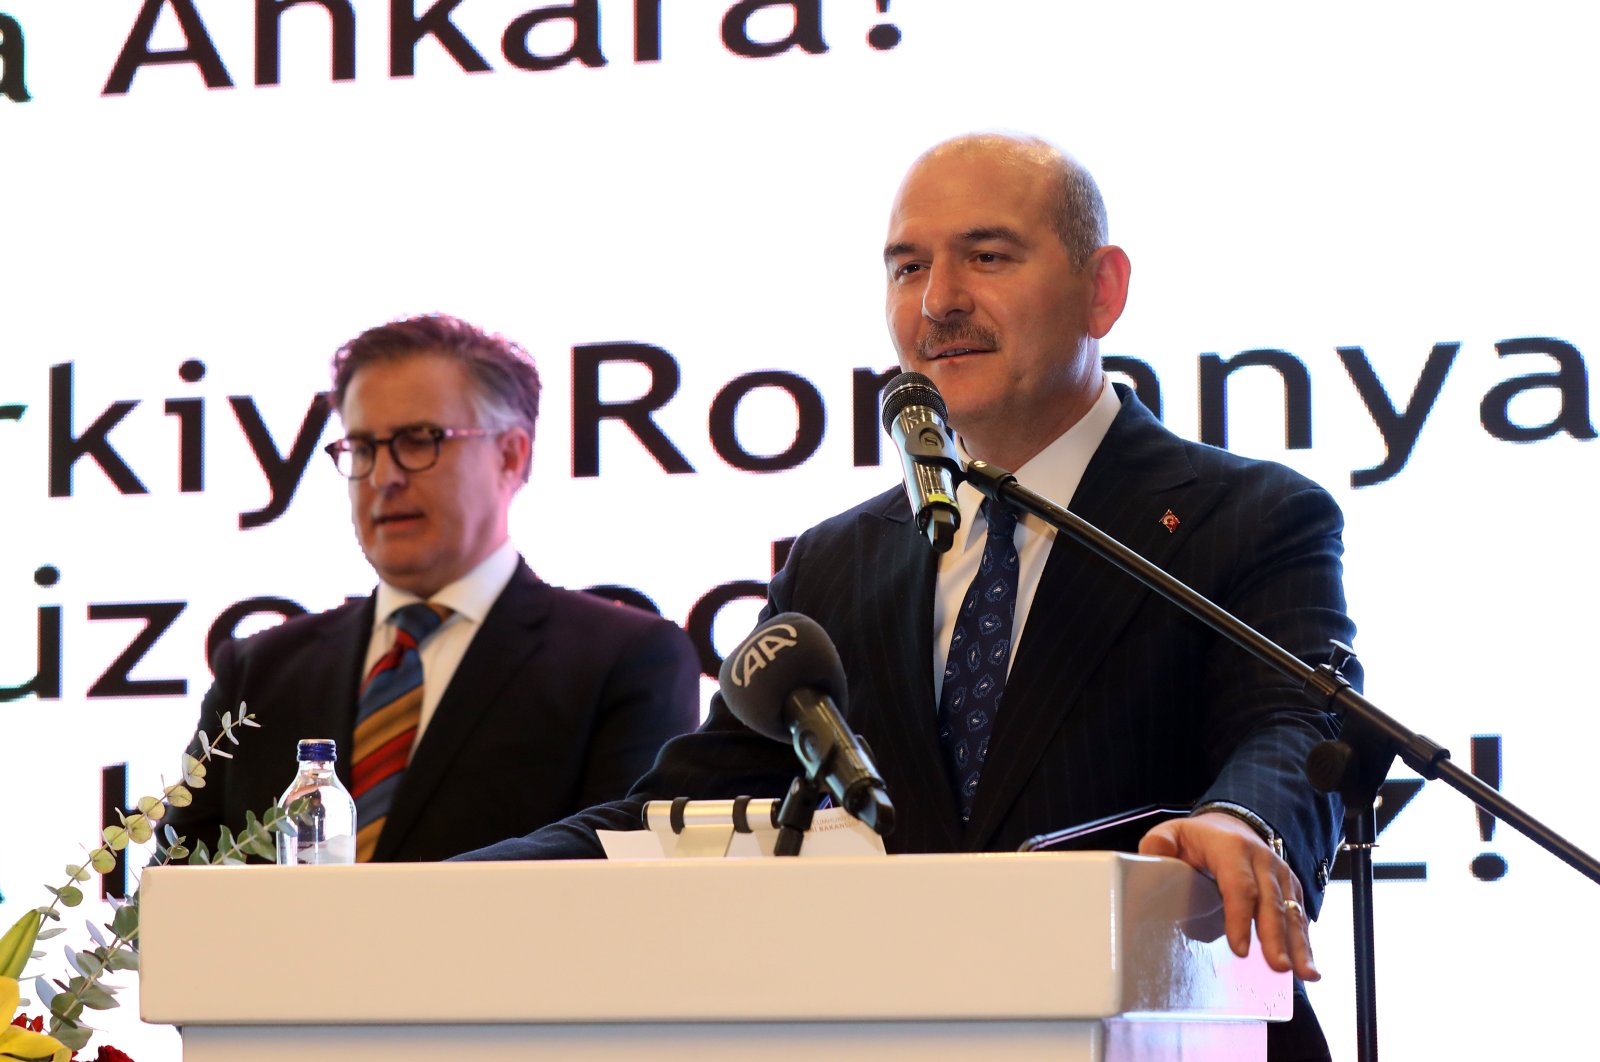 Türkiye-Romania ties source of pride: Interior Minister Soylu